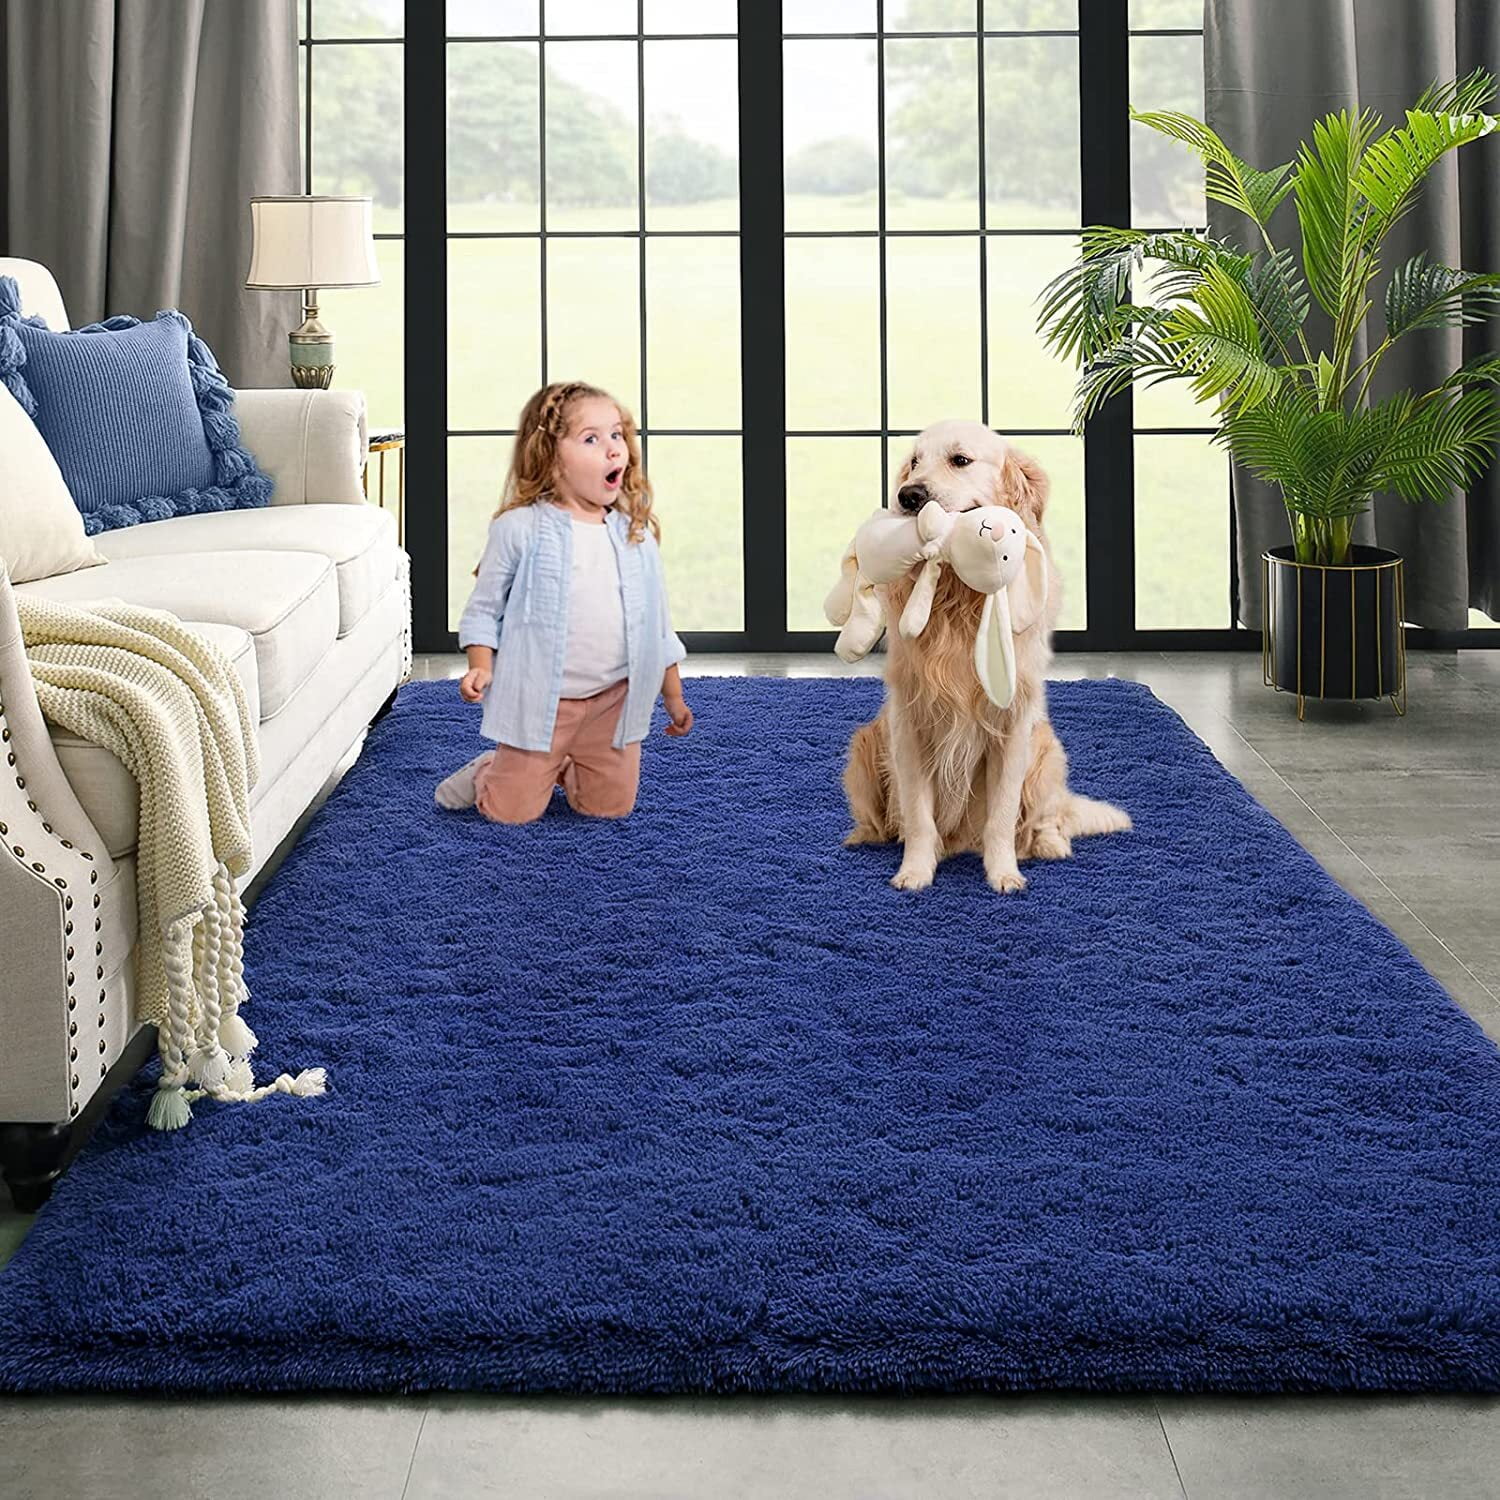 DweIke Super Soft Shaggy Rugs Fluffy Carpets/Area Rug for Living Room Bedroom Girls Kids Room Nursery Home Decor, Non-Slip Plush Indoor Floor